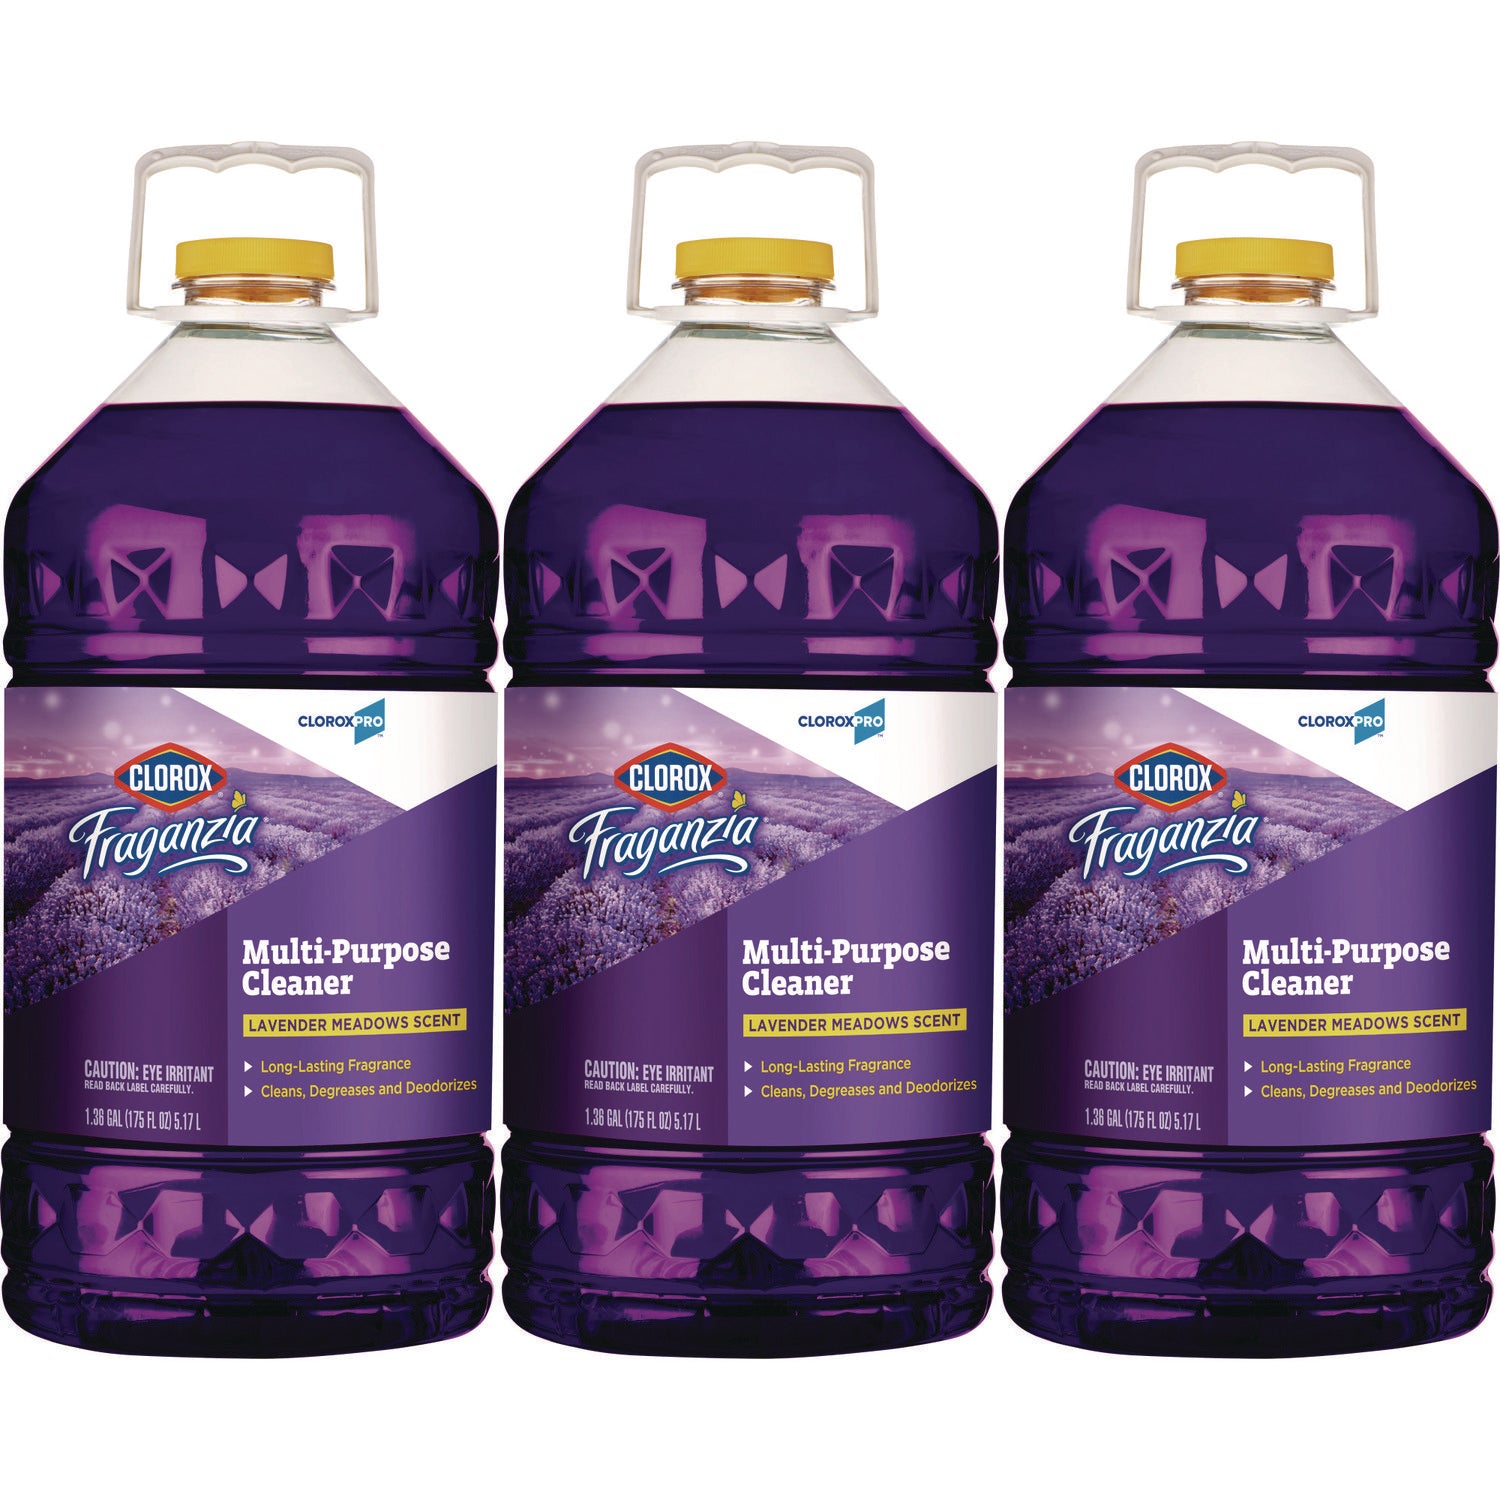 CloroxPro Fraganzia Multi-Purpose Cleaner Concentrate, Lavender Meadows Scent, 175 oz Bottle, 3/Carton - 1